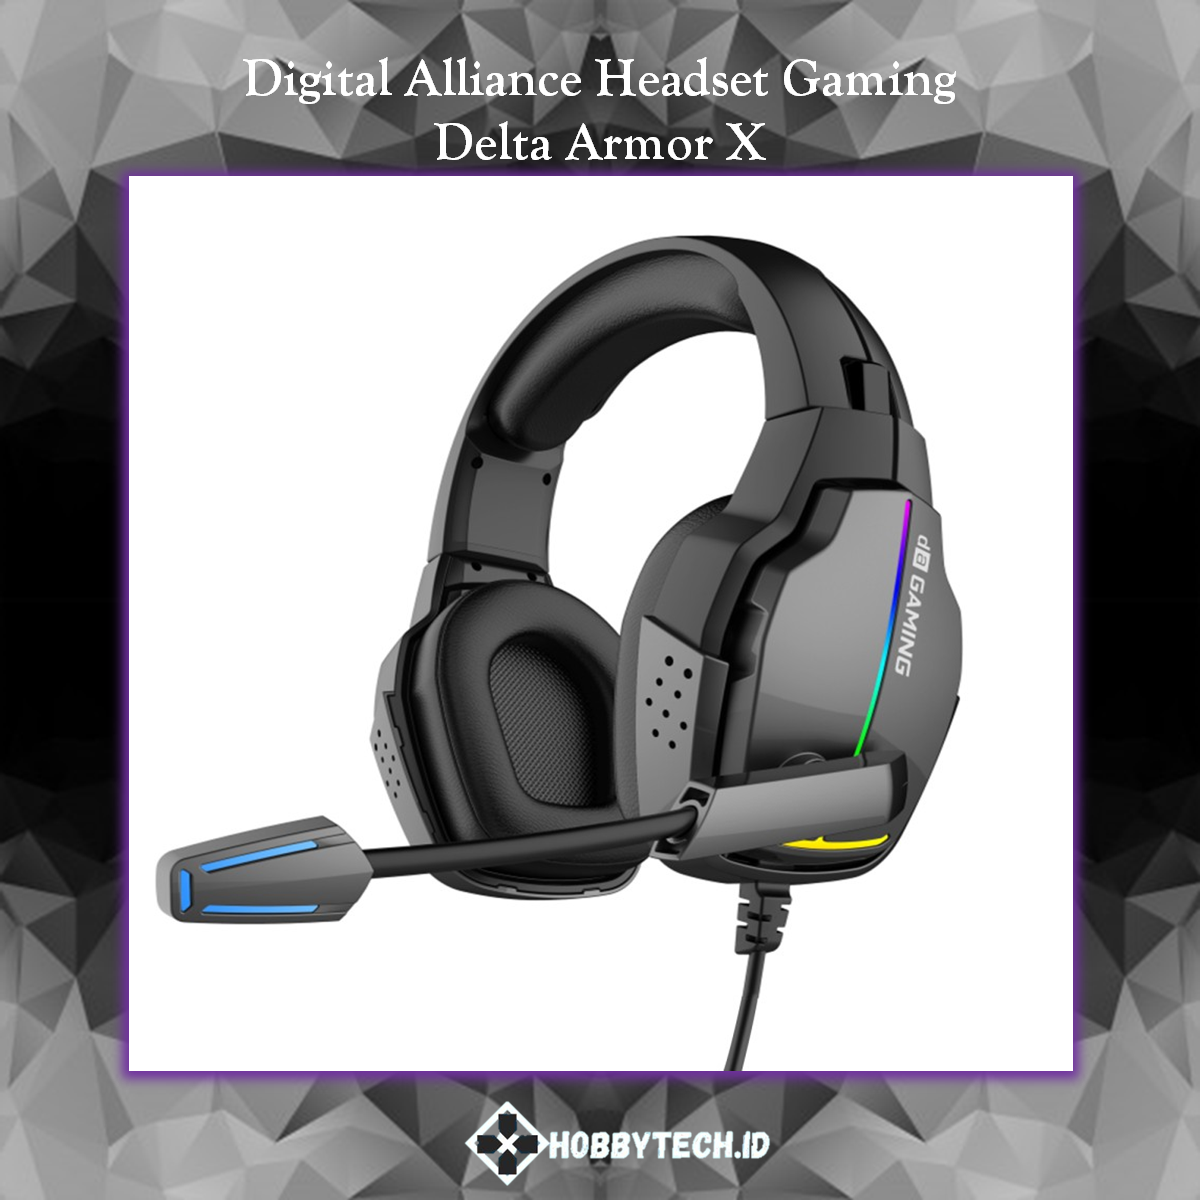 Digital Alliance Headset Gaming Delta Armor X